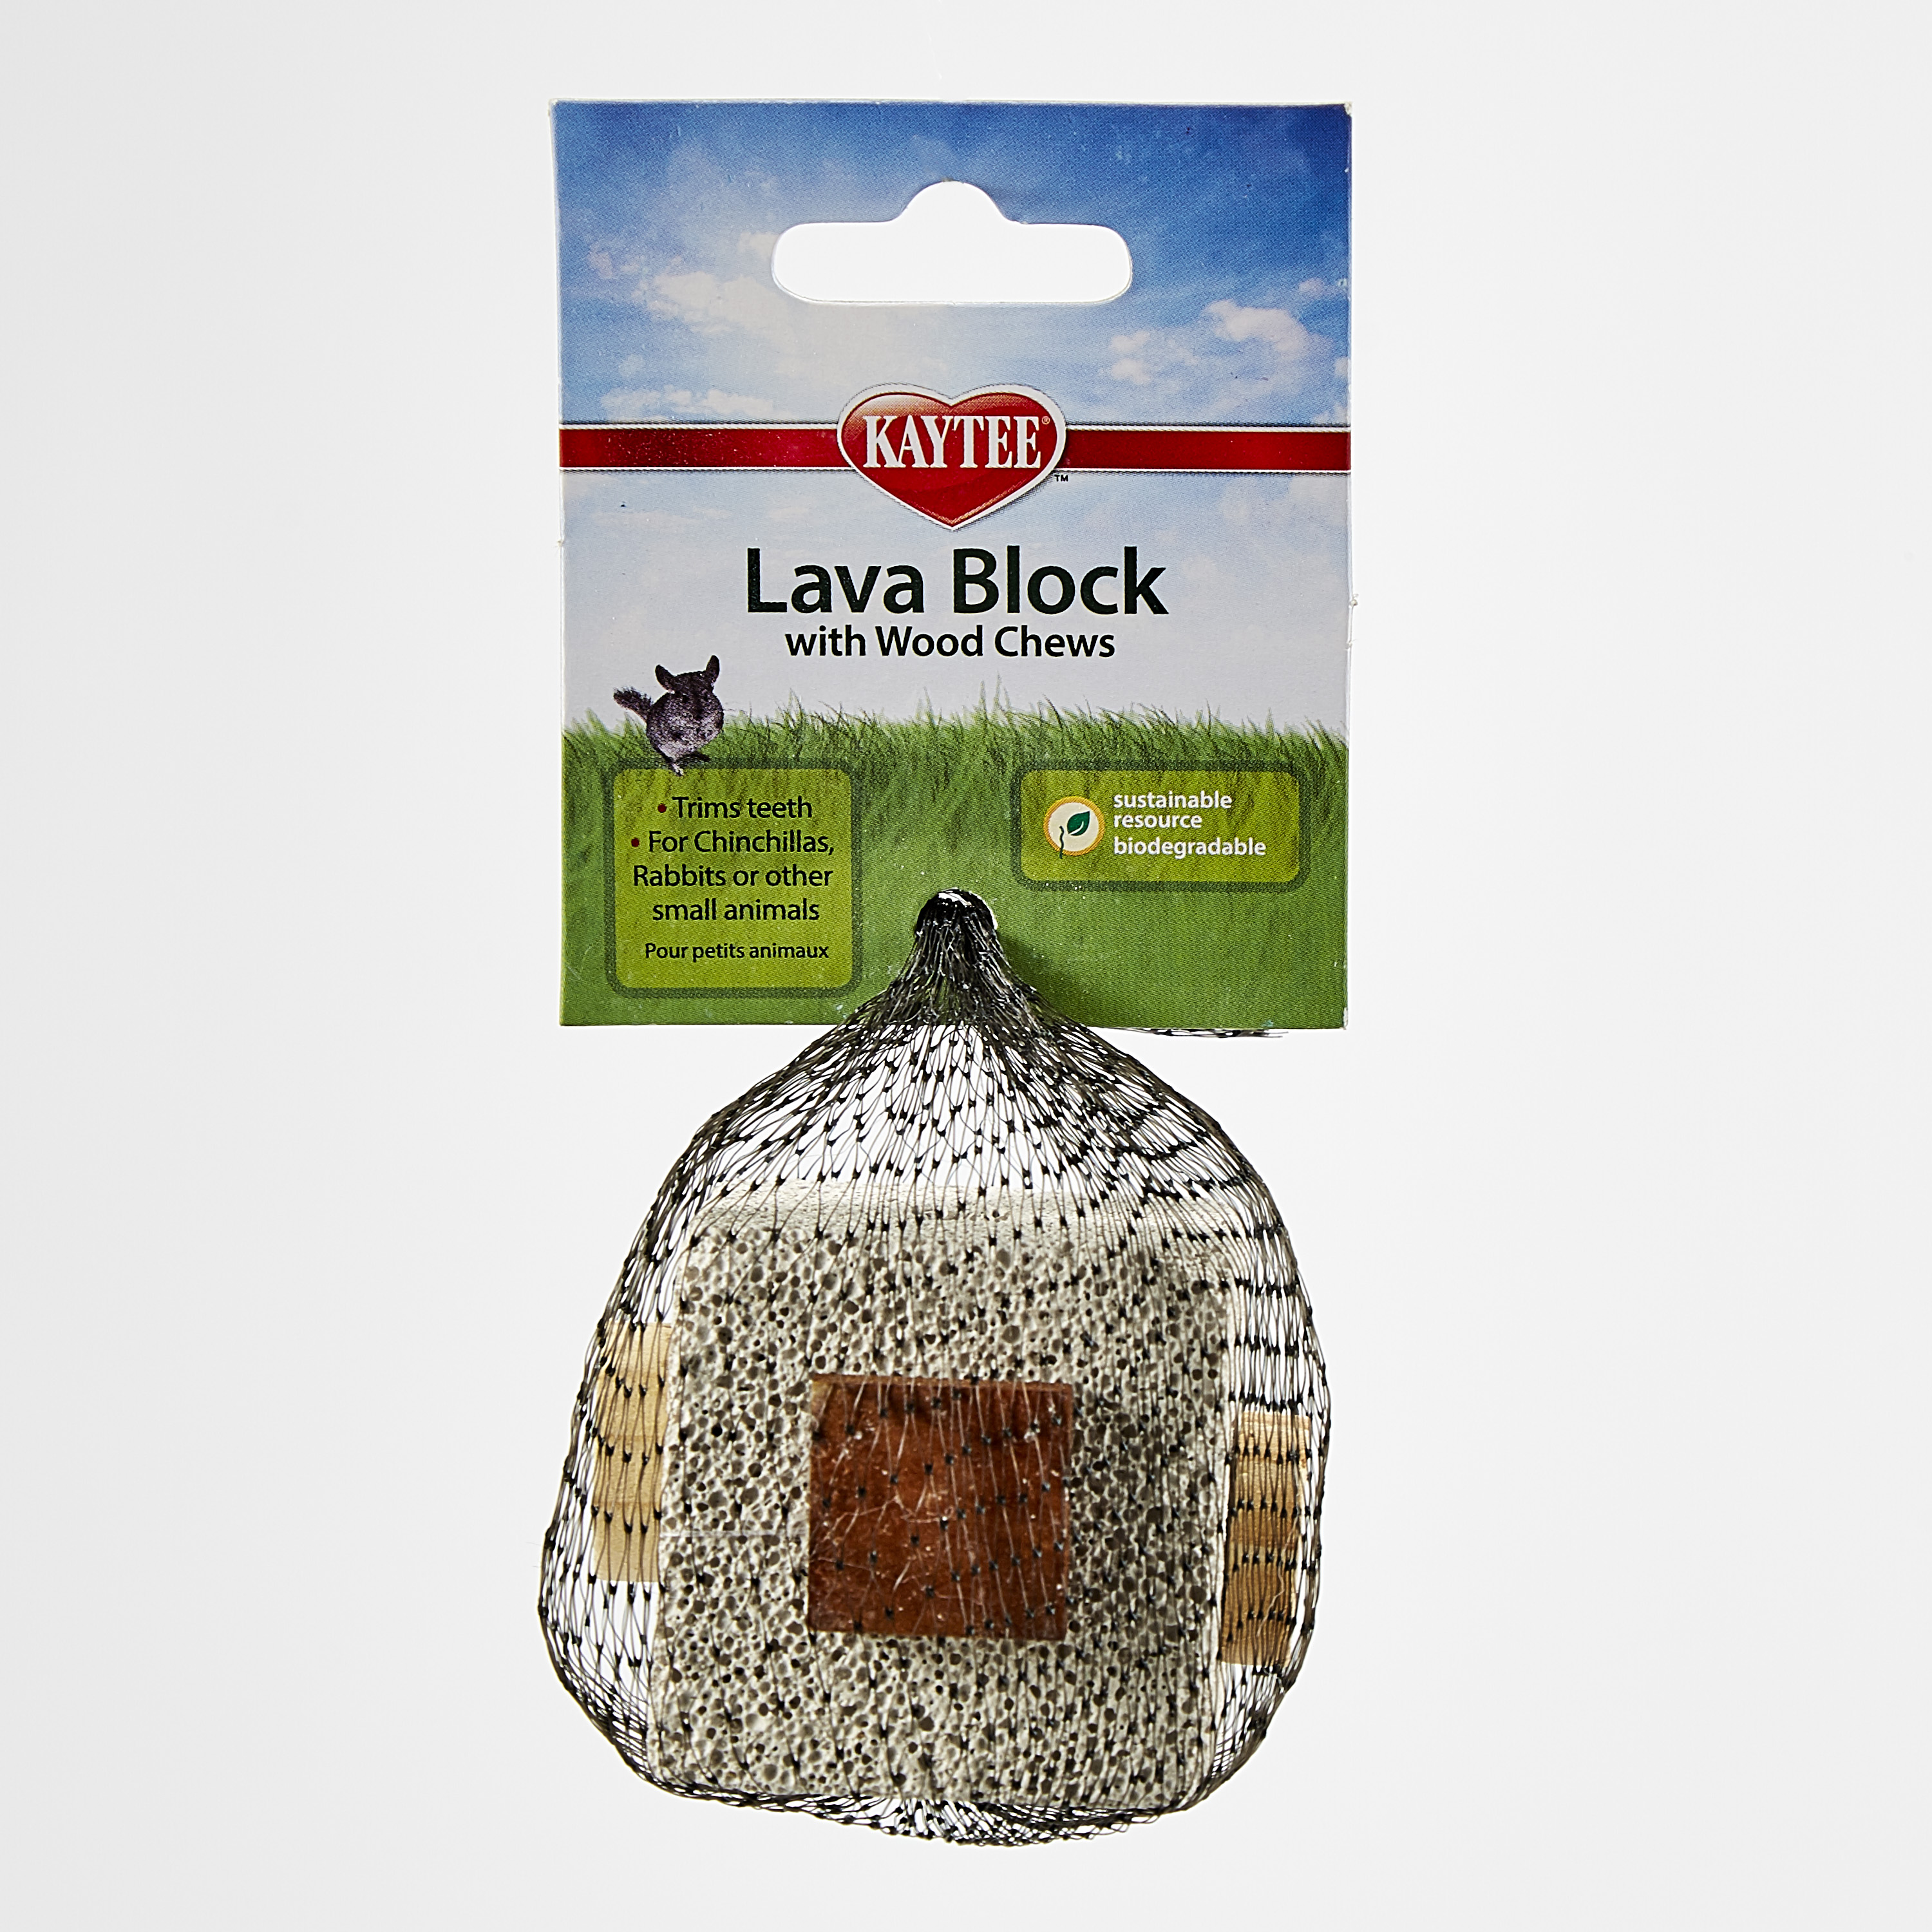 Kaytee Lava Block with Wood Chews